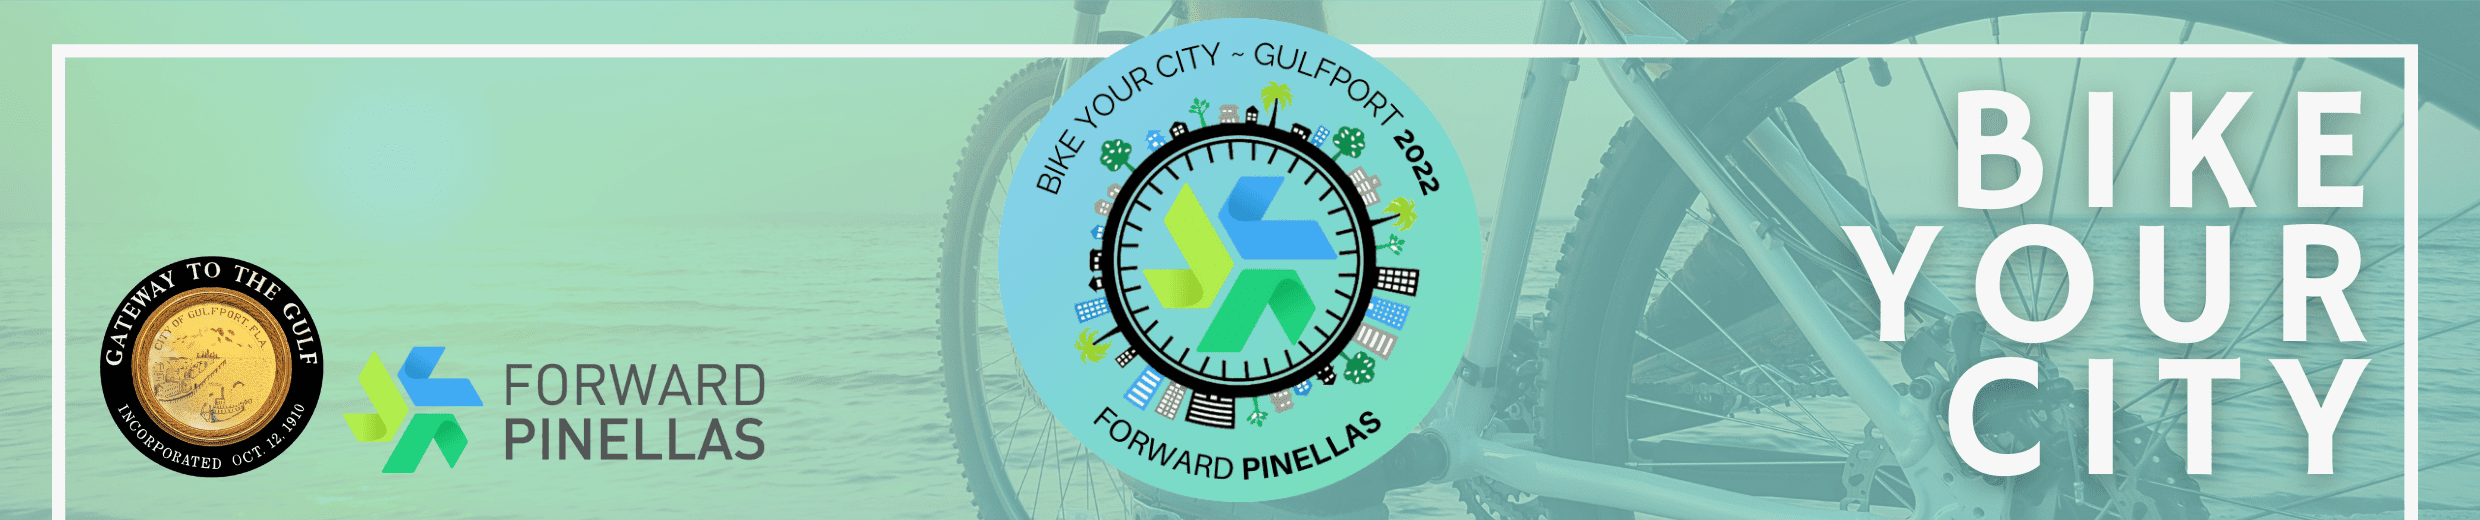 bike your city header 2022